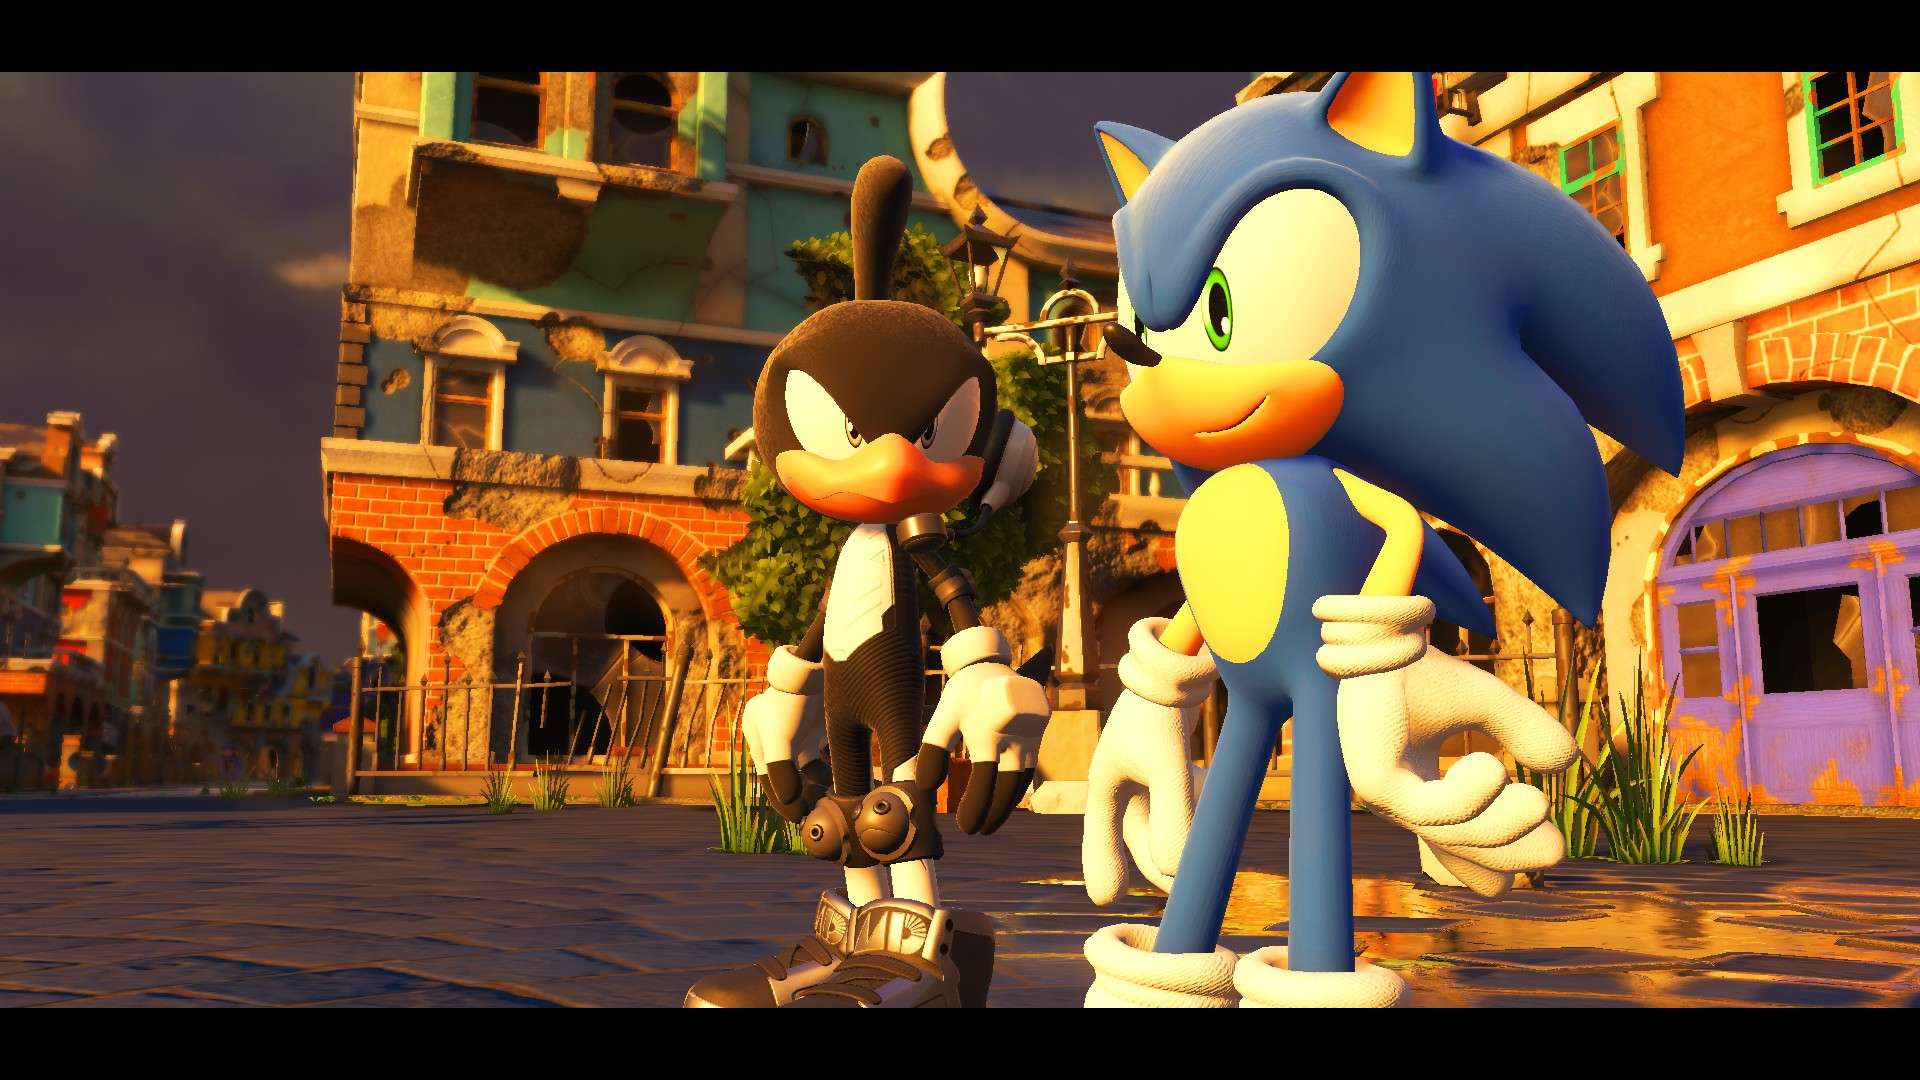 Sonic Forces - Metacritic